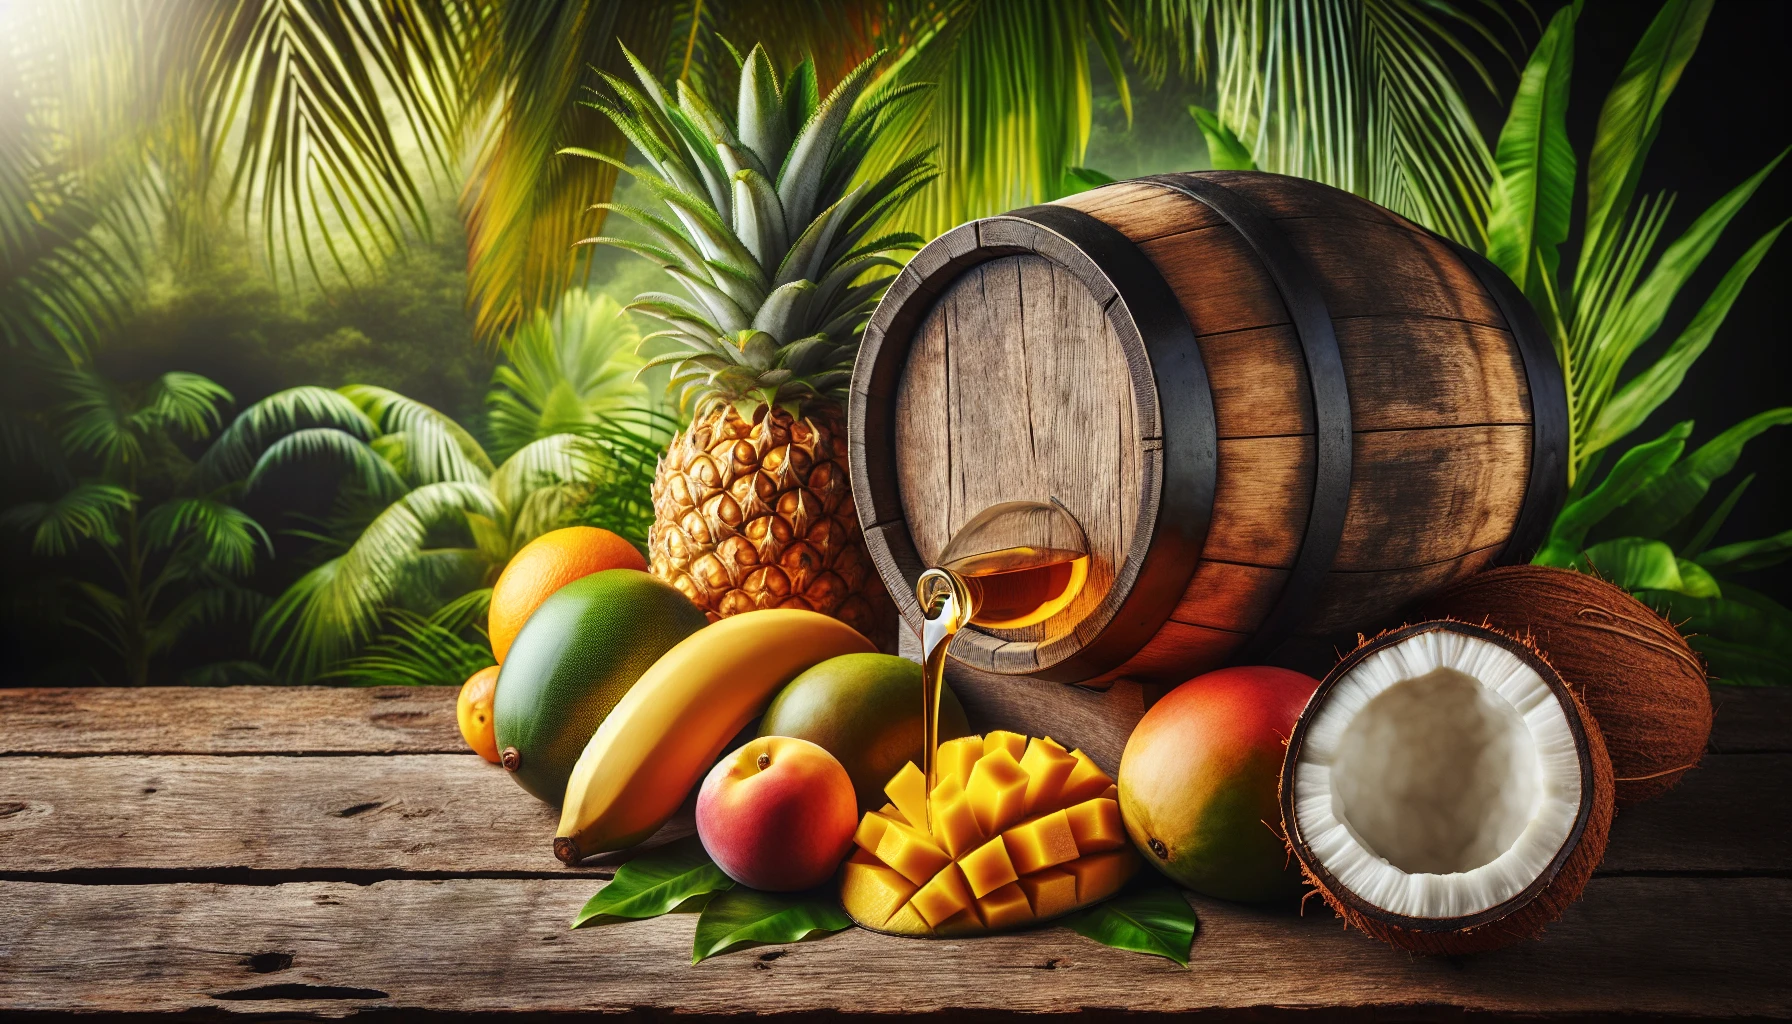 Tropical fruits and rum barrel representing The Glenlivet Caribbean Reserve